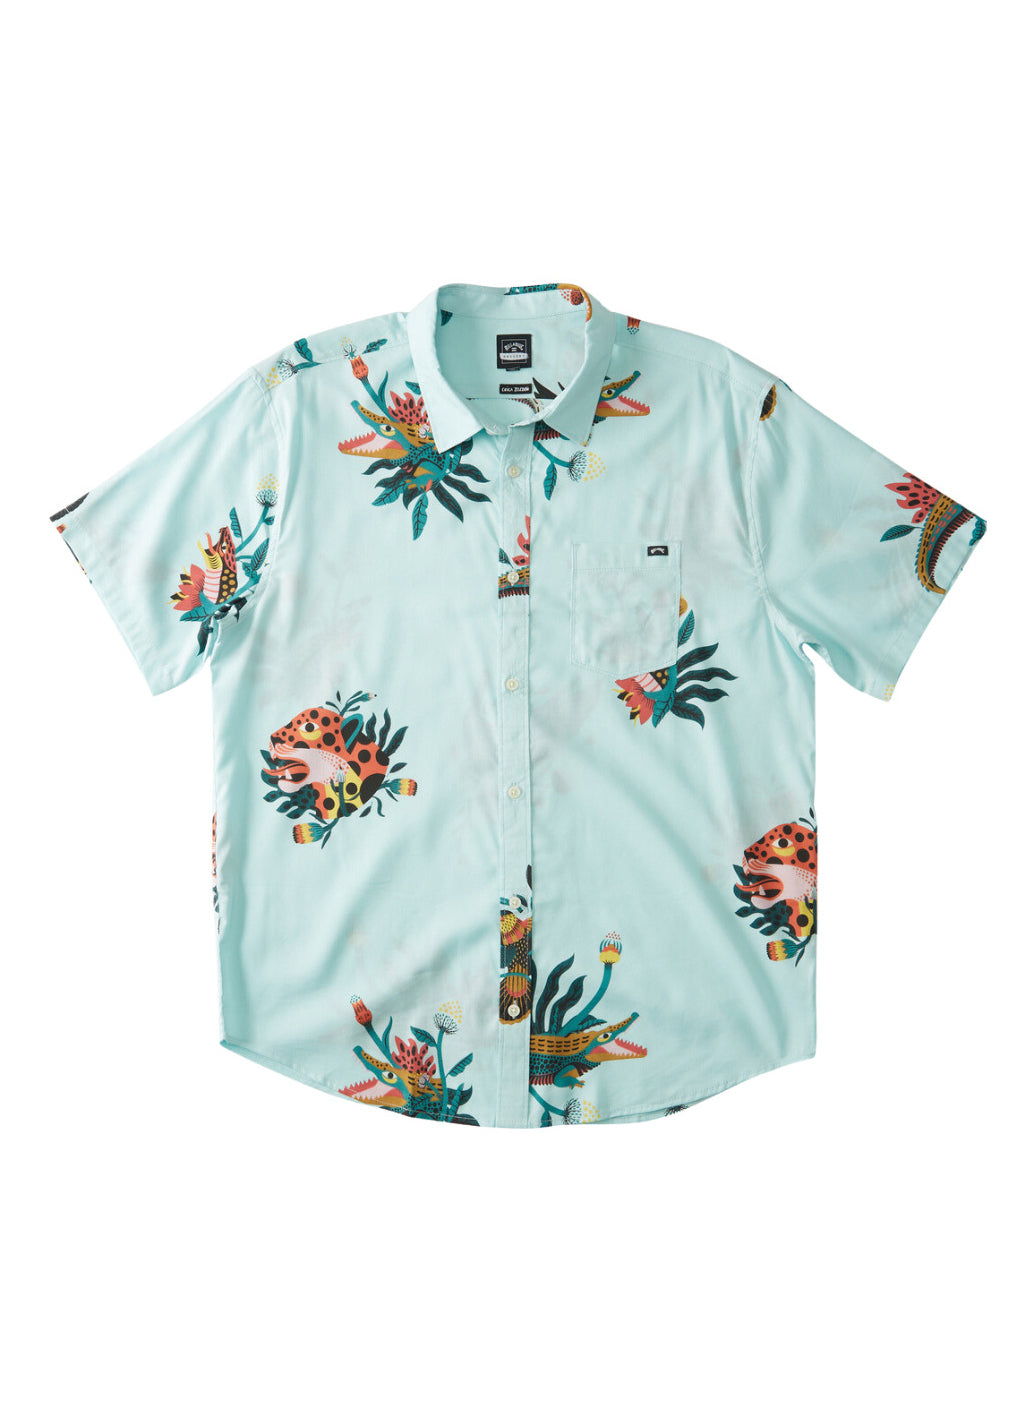 Billabong Zeledon Sundays Short Sleeve Shirt CTL-Coastal S